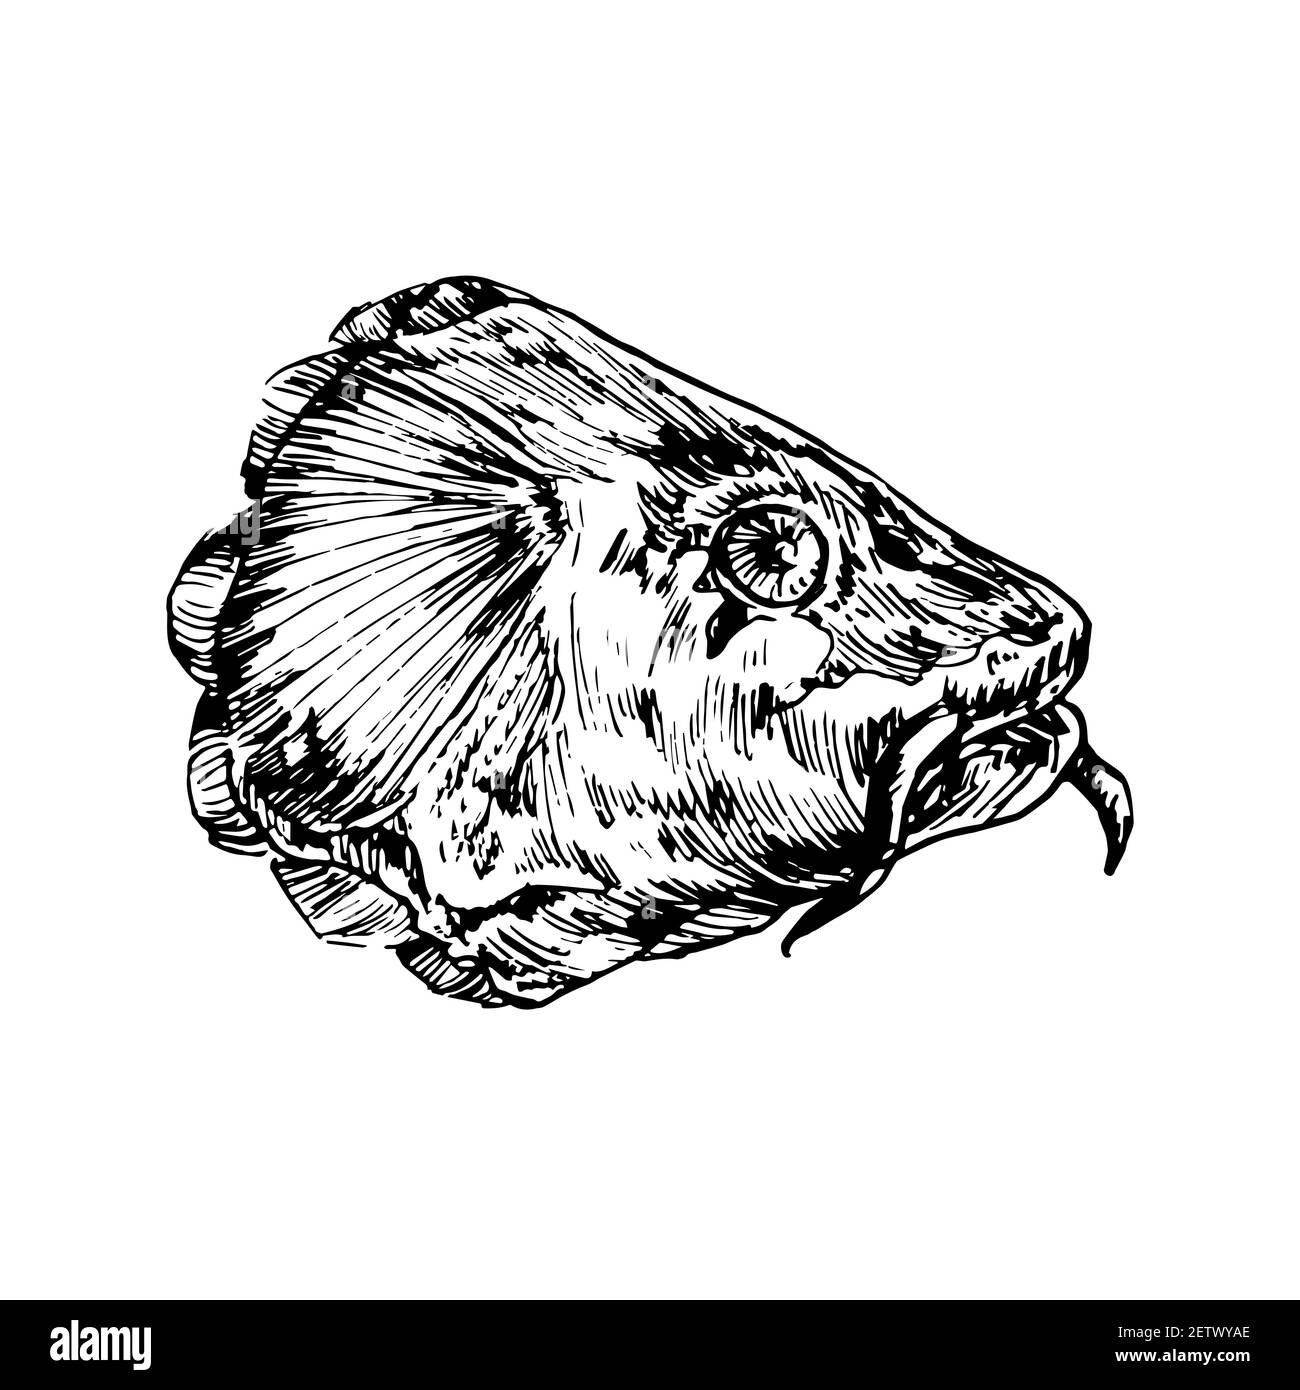 Carp fish head, hand drawn doodle black ink drawing, woodcut style Stock Photo